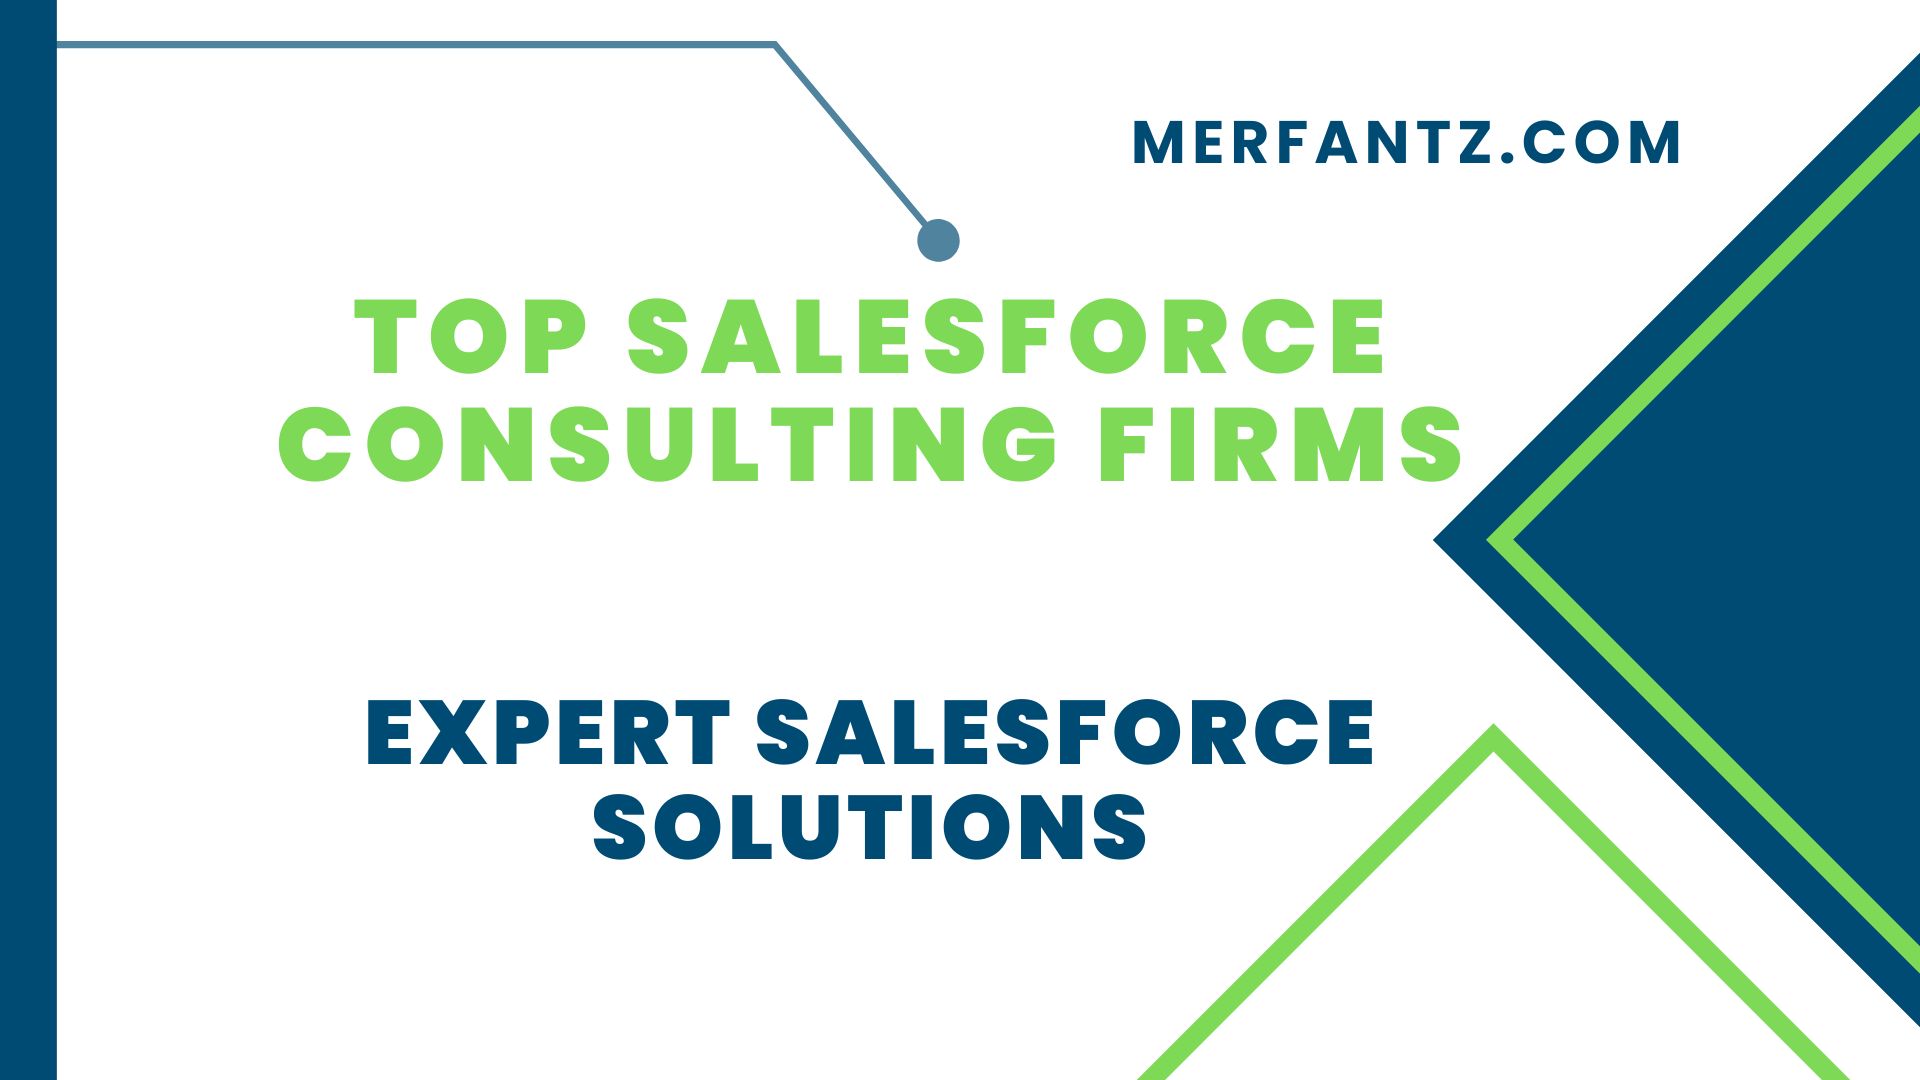 Top Salesforce Consulting Firms | Expert Salesforce Solutions | Merfantz